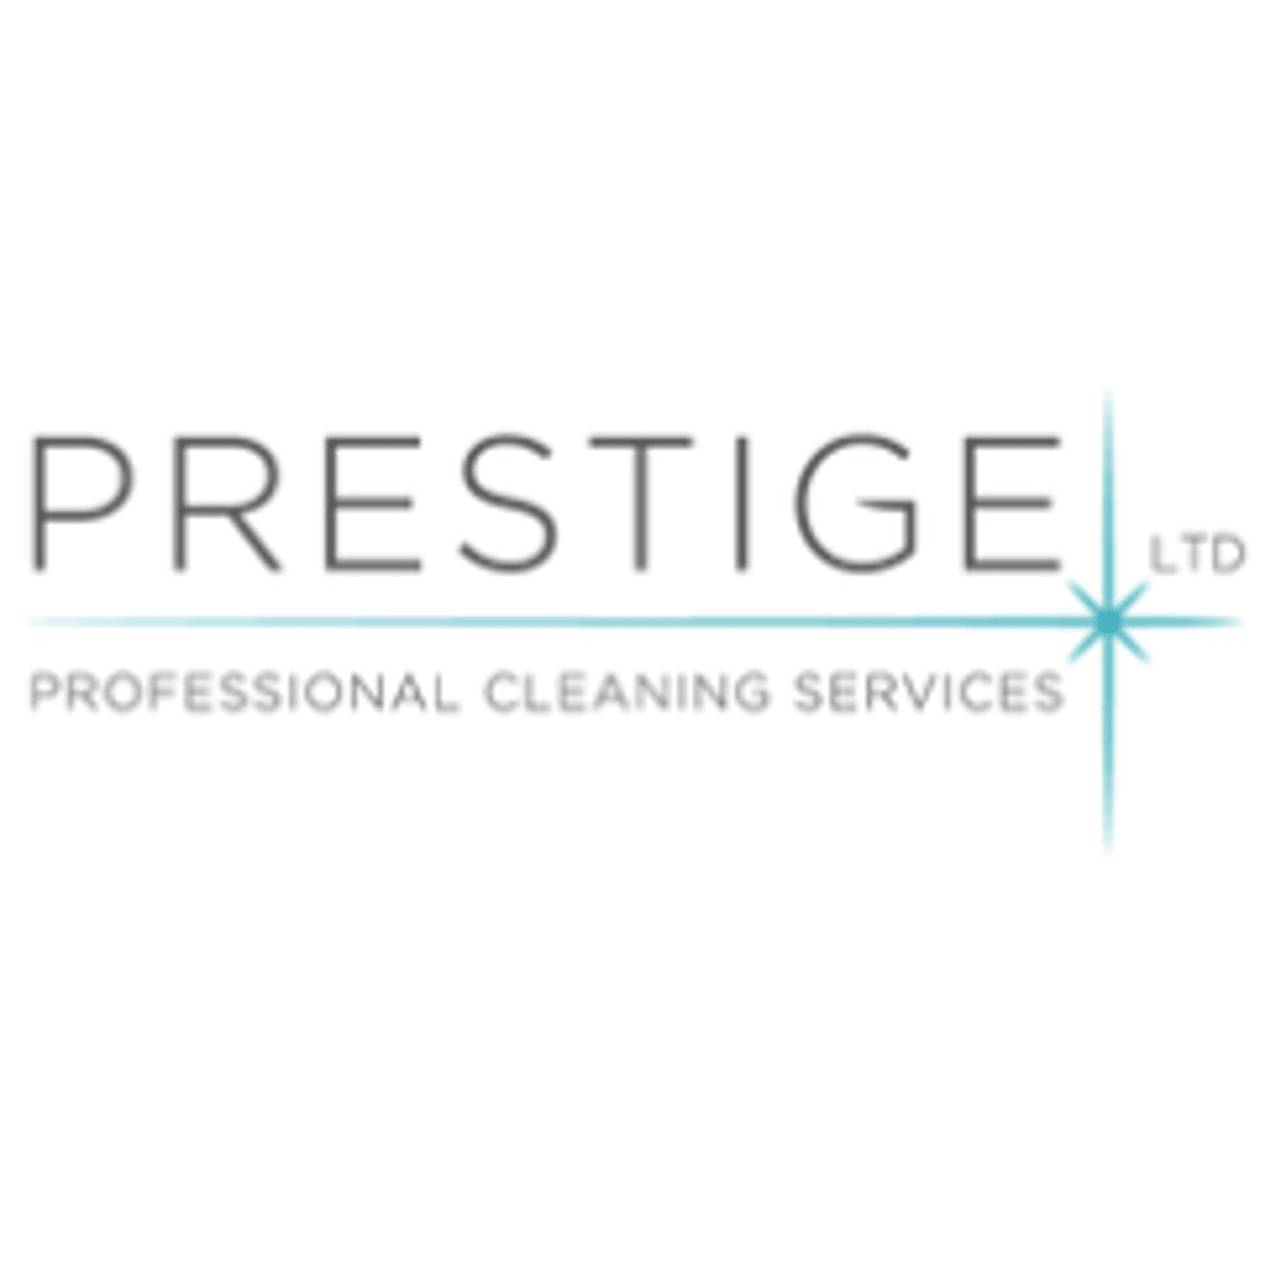 LOGO Prestige Professional Cleaning Services Ltd Port Talbot 07967 404710